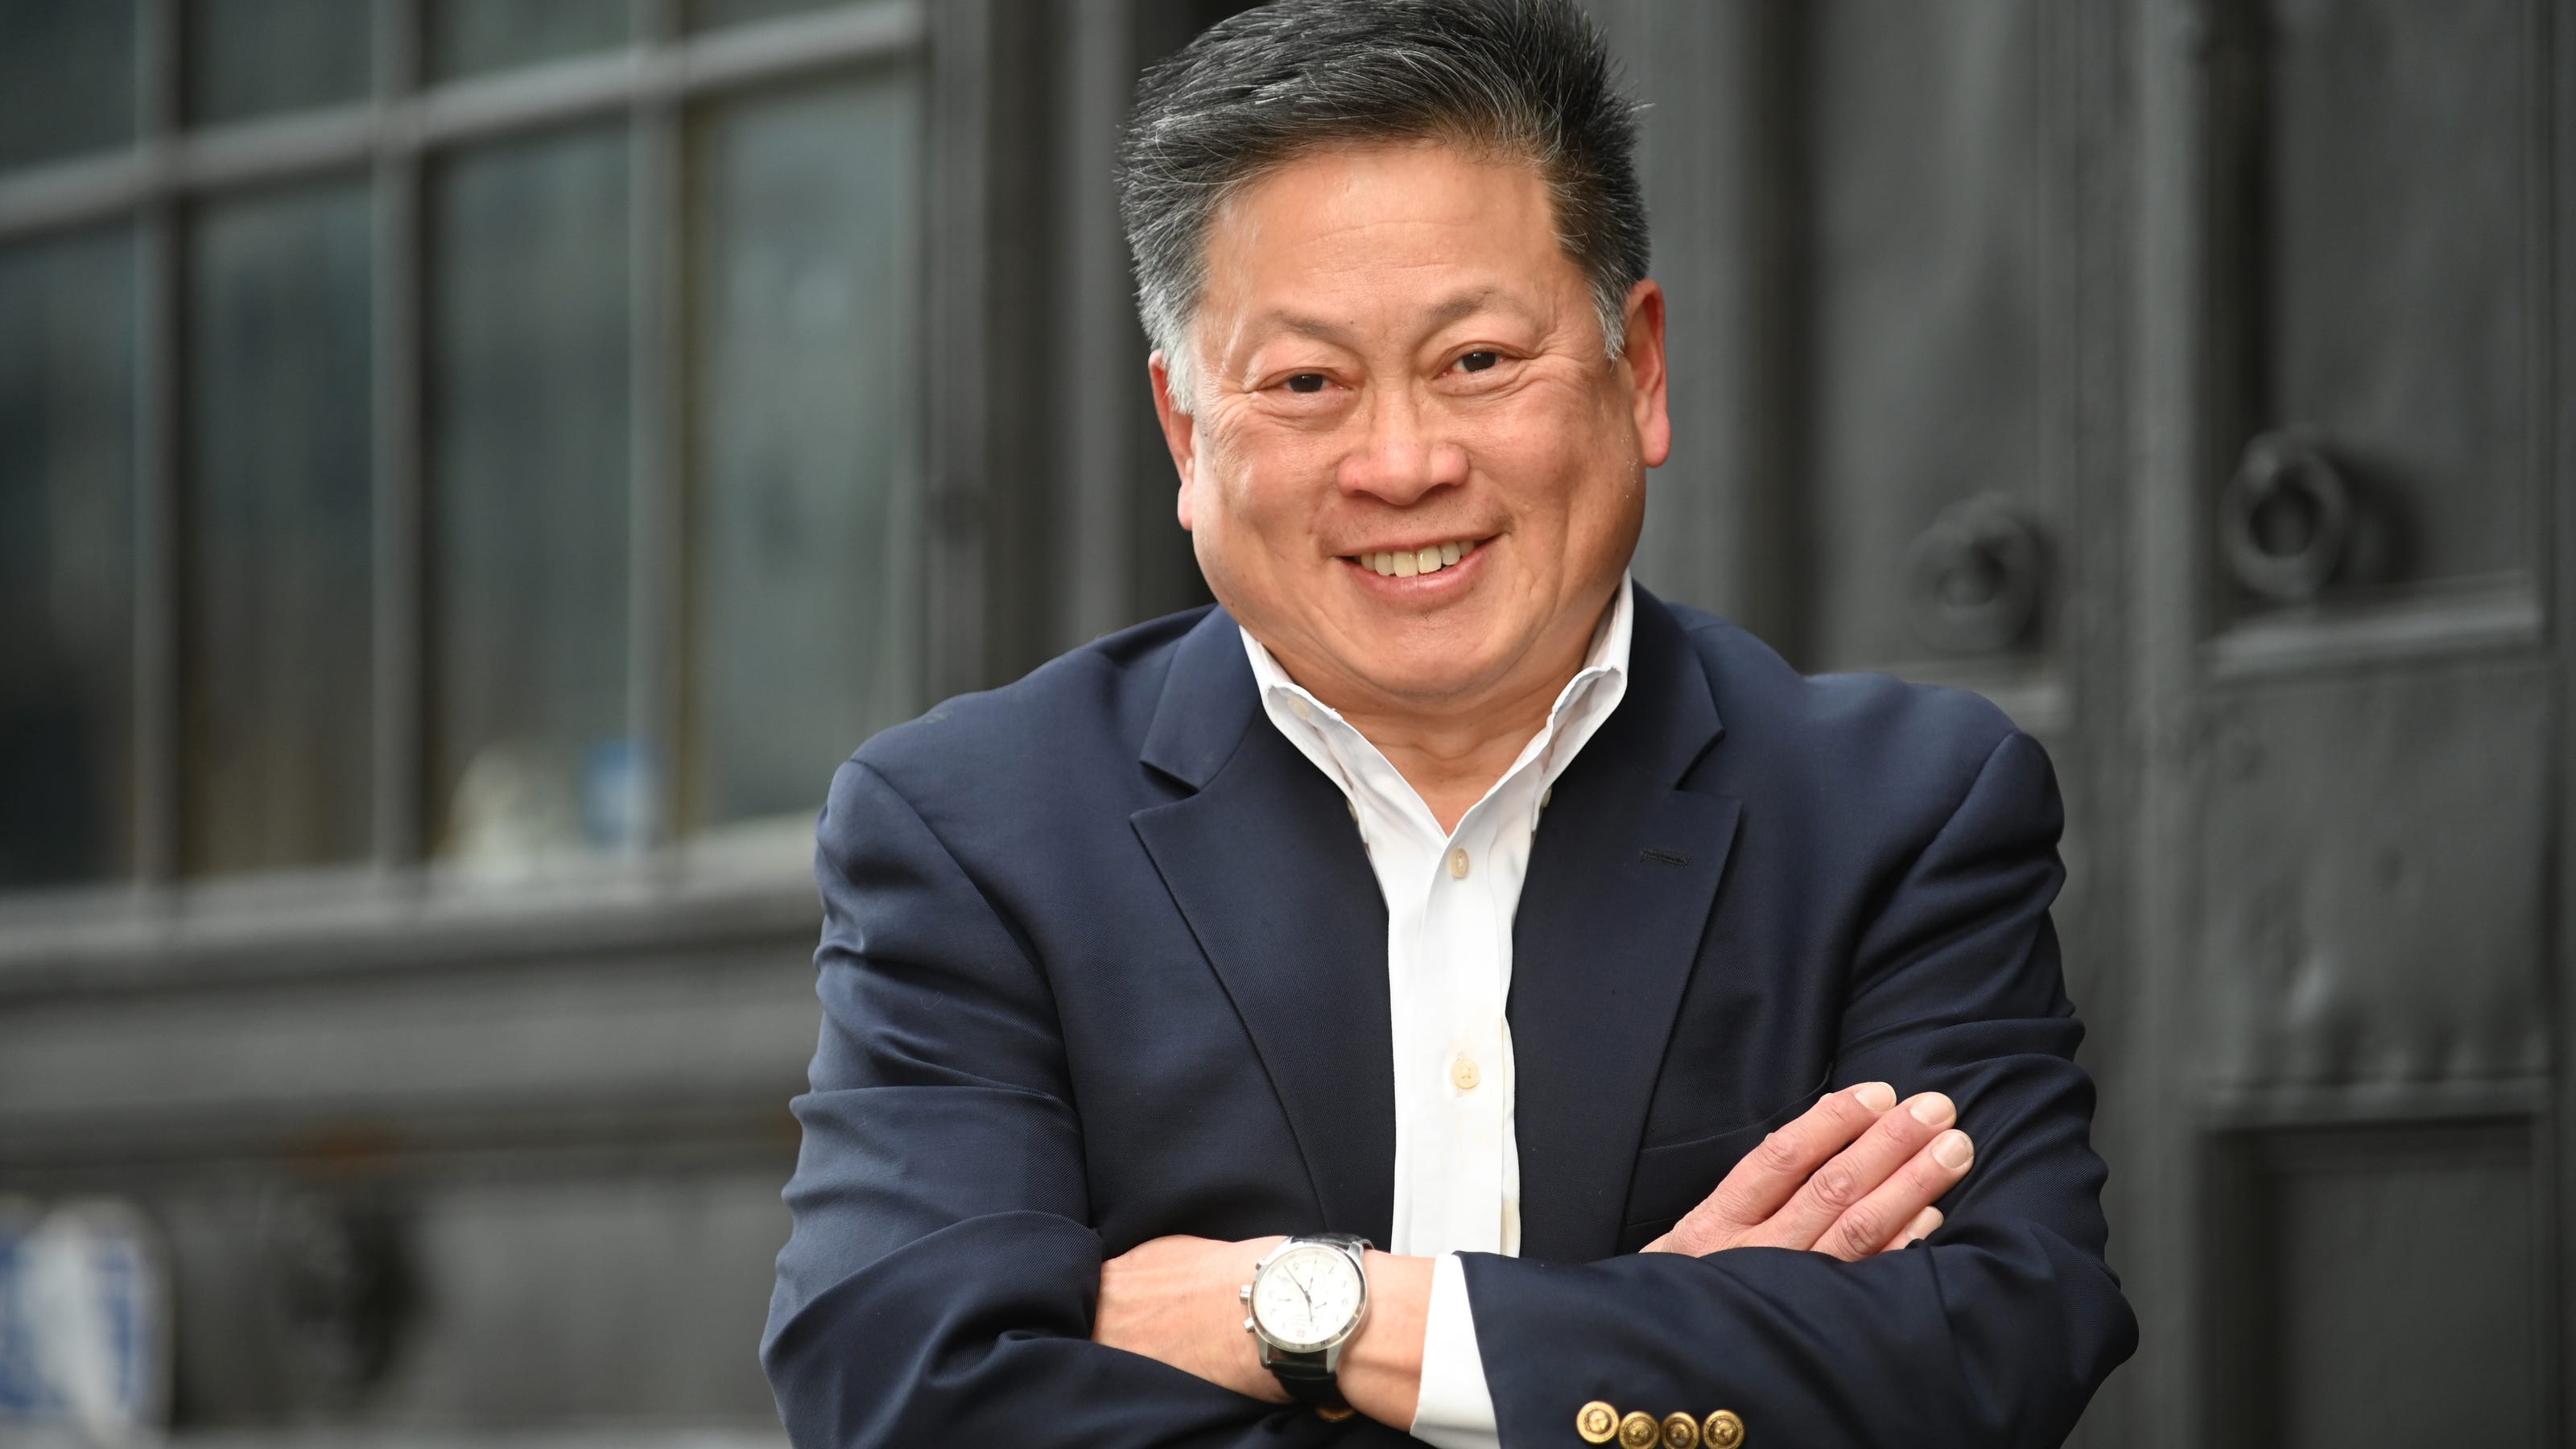 David Ng named executive editor of The Providence Journal